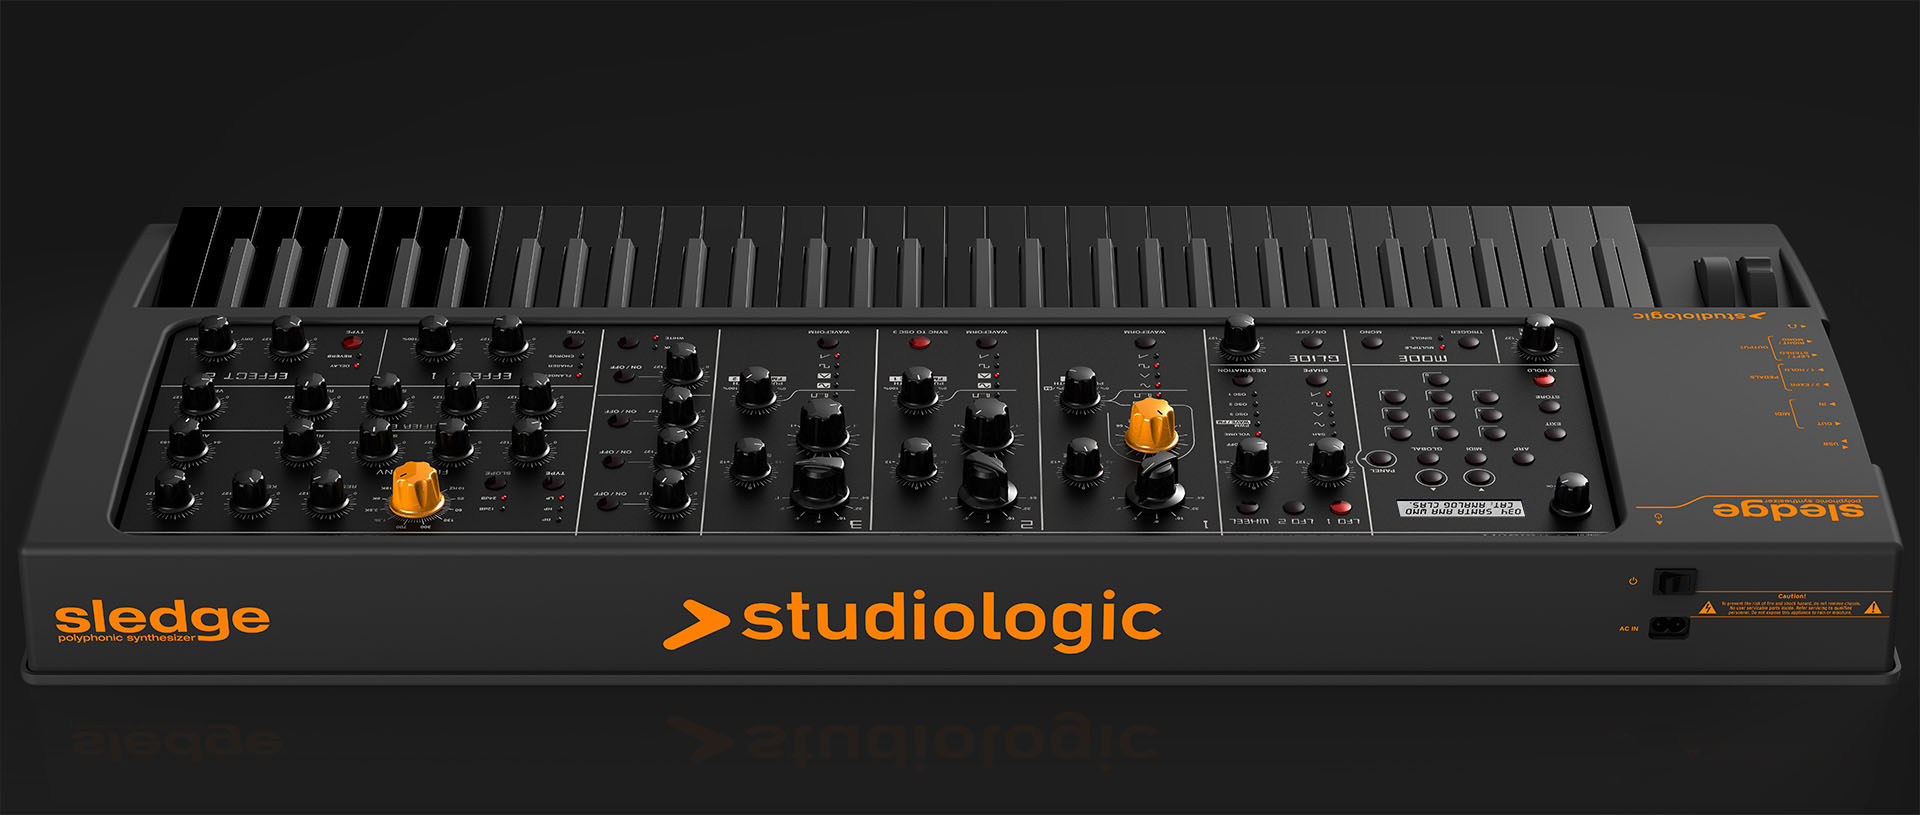 Studiologic Sledge Black Edition - Synthesizer - Variation 1